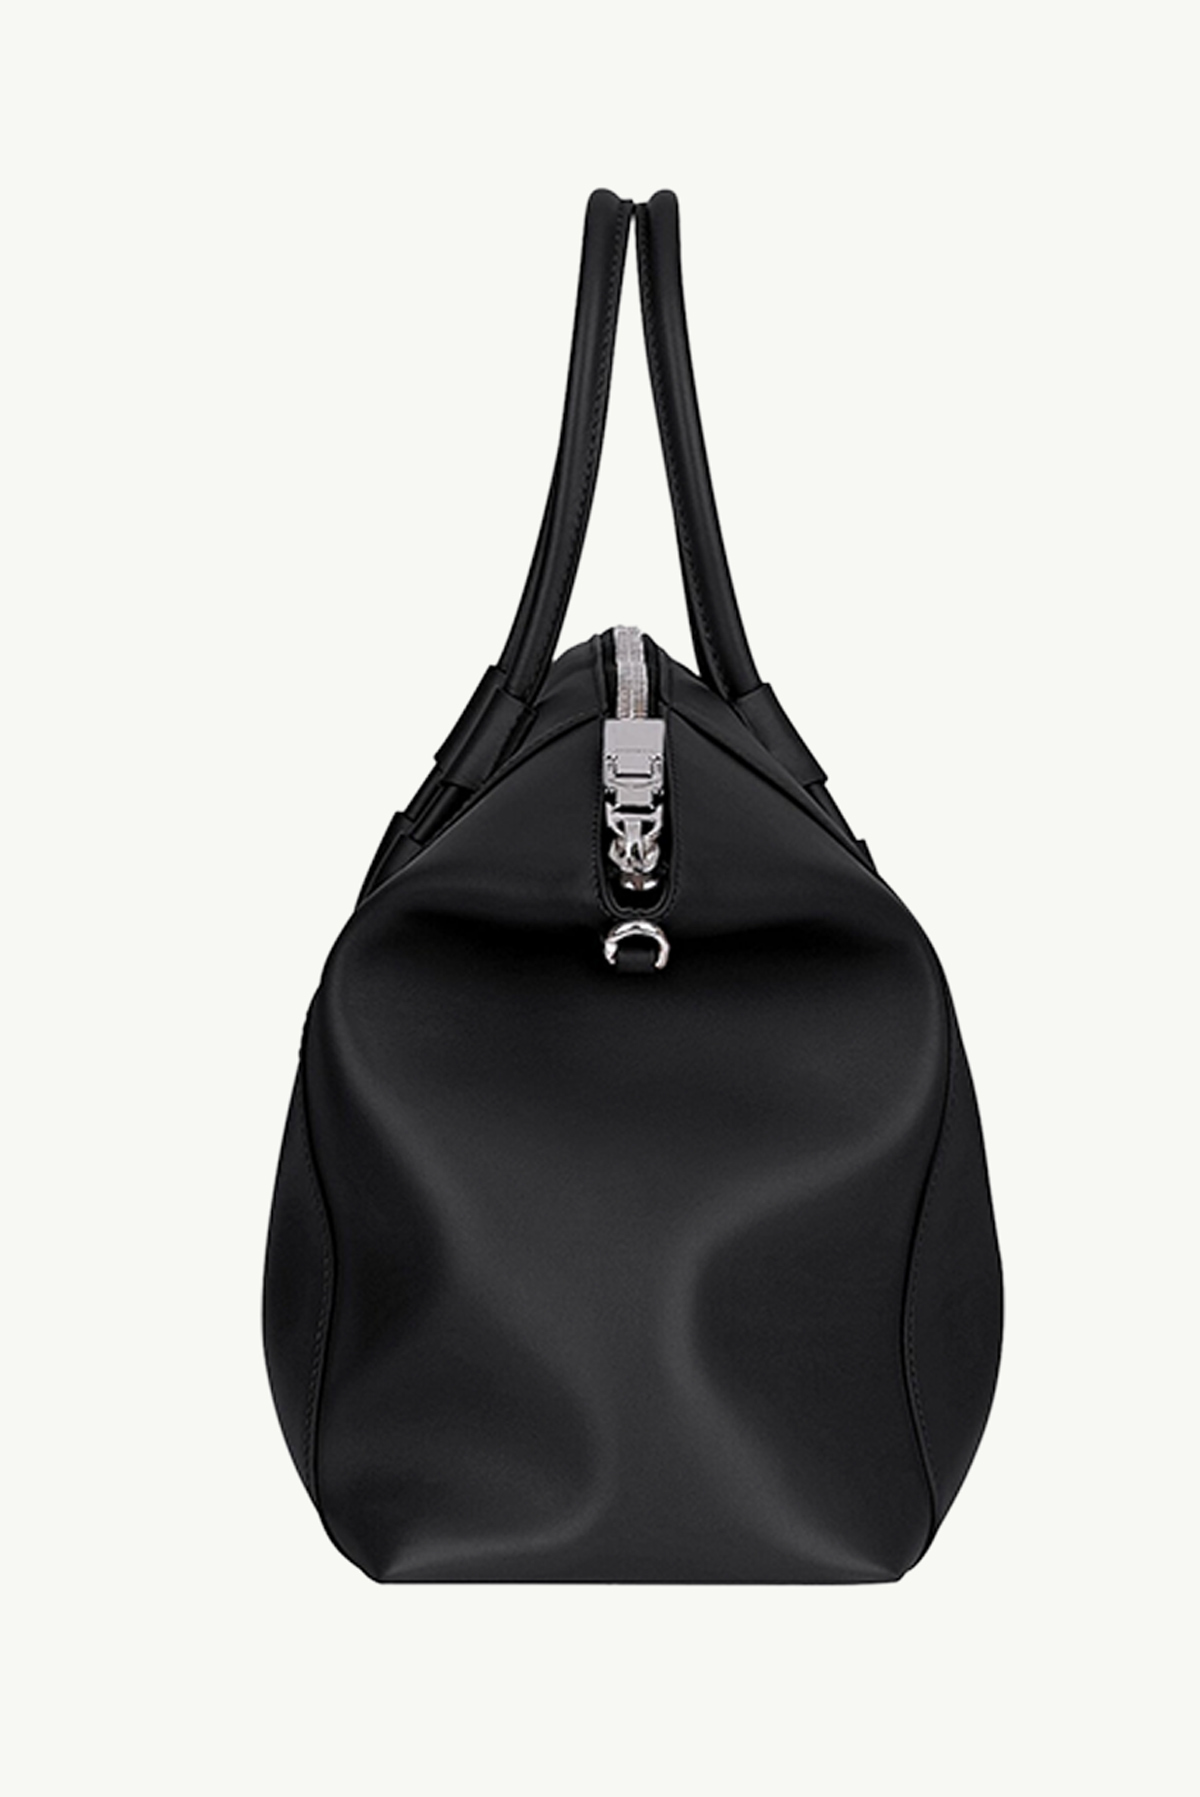 GIVENCHY Small Antigona Sport Bag in Black Smooth Leather 2